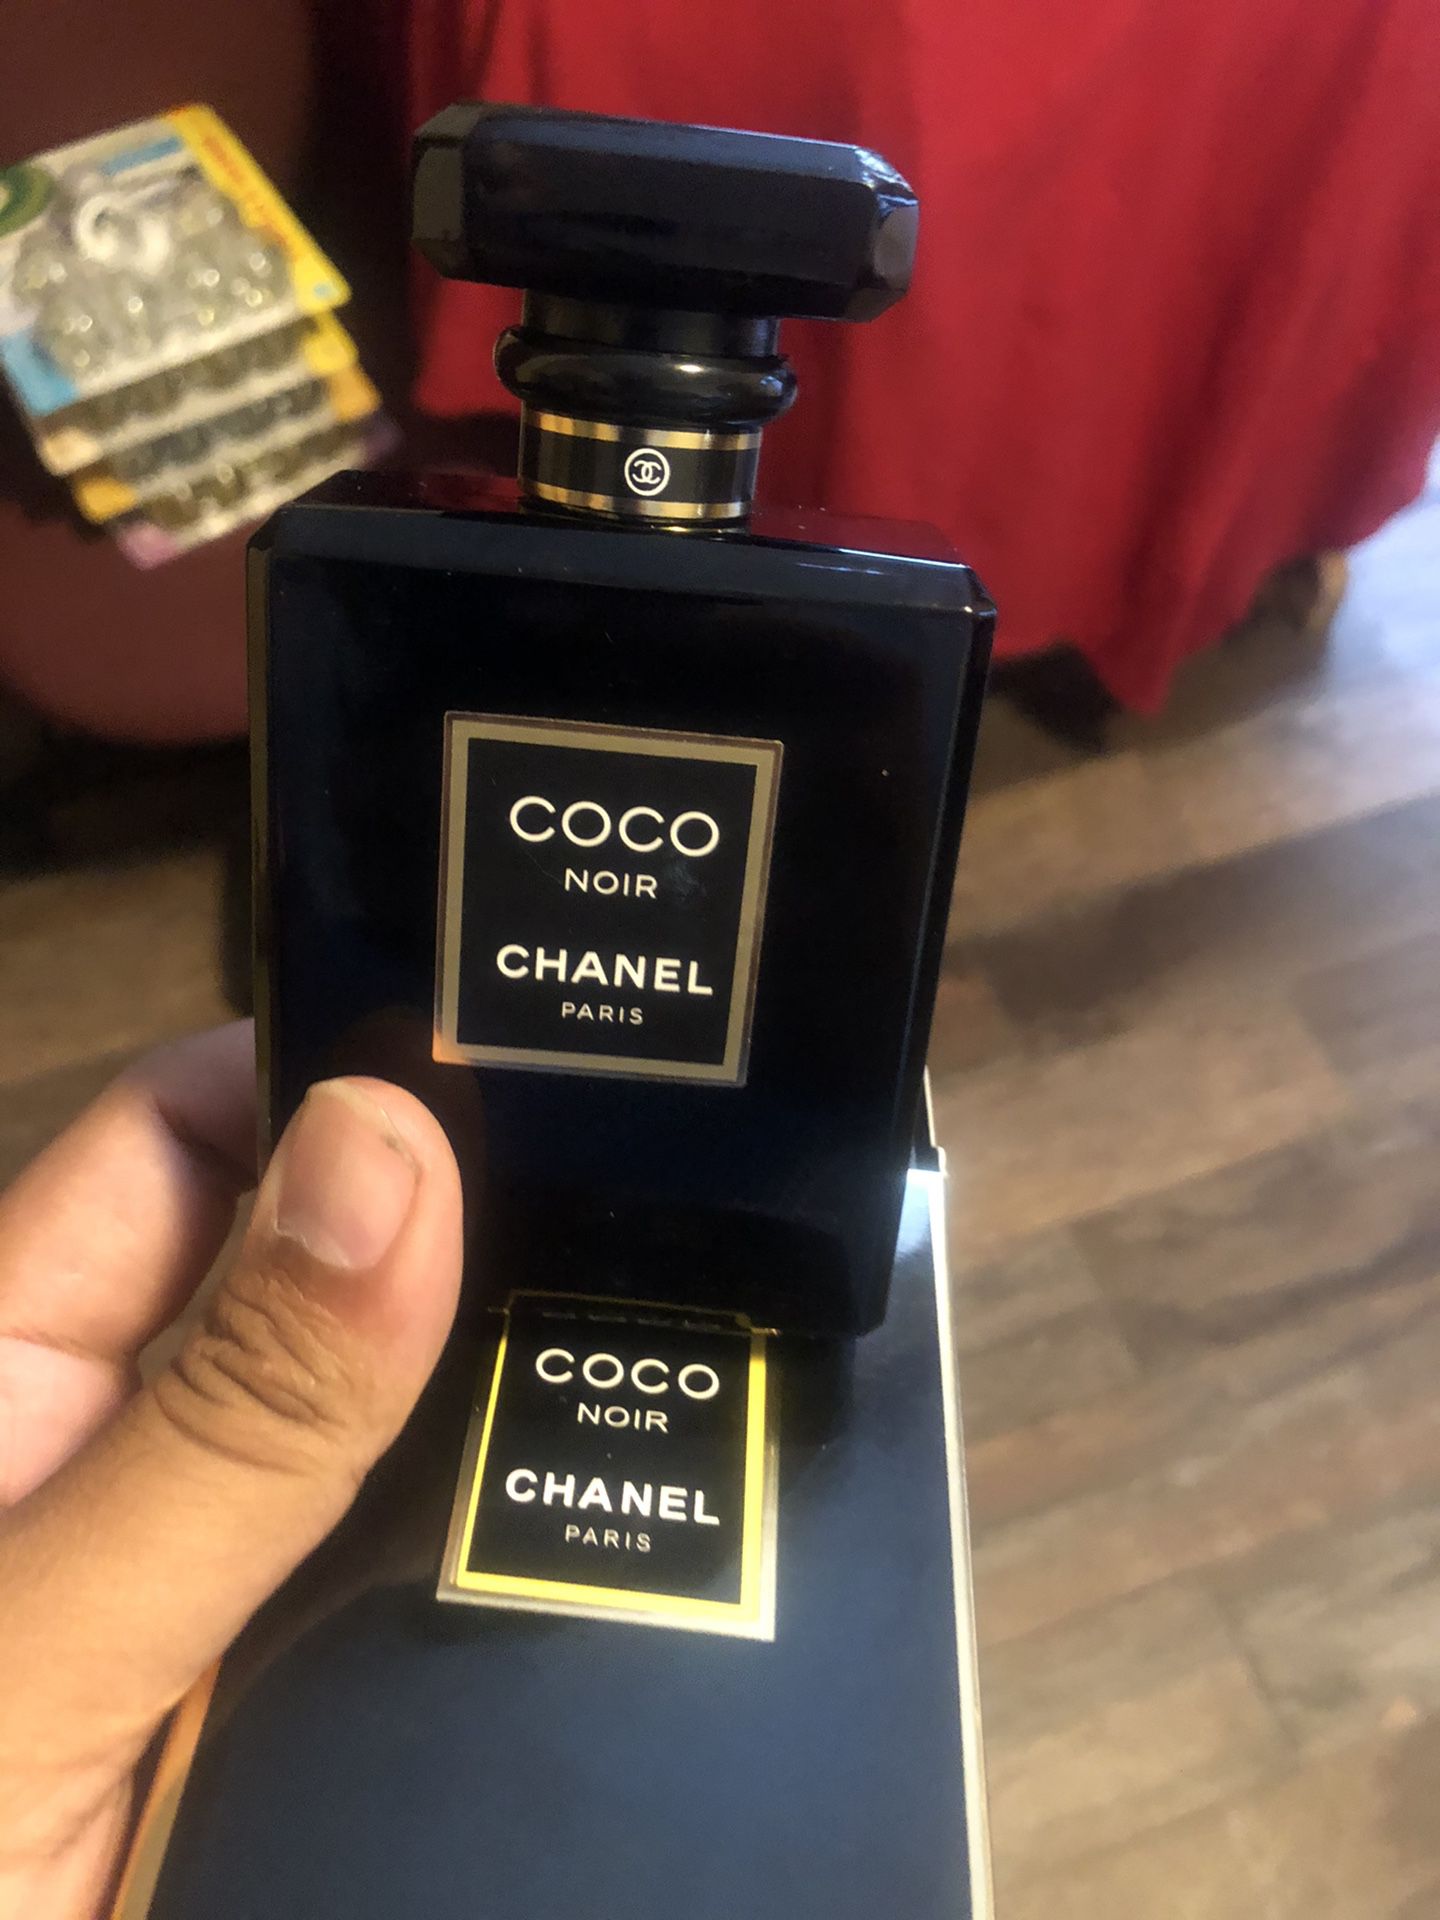 Coco Chanel (noir Paris) perfume (fragrance)